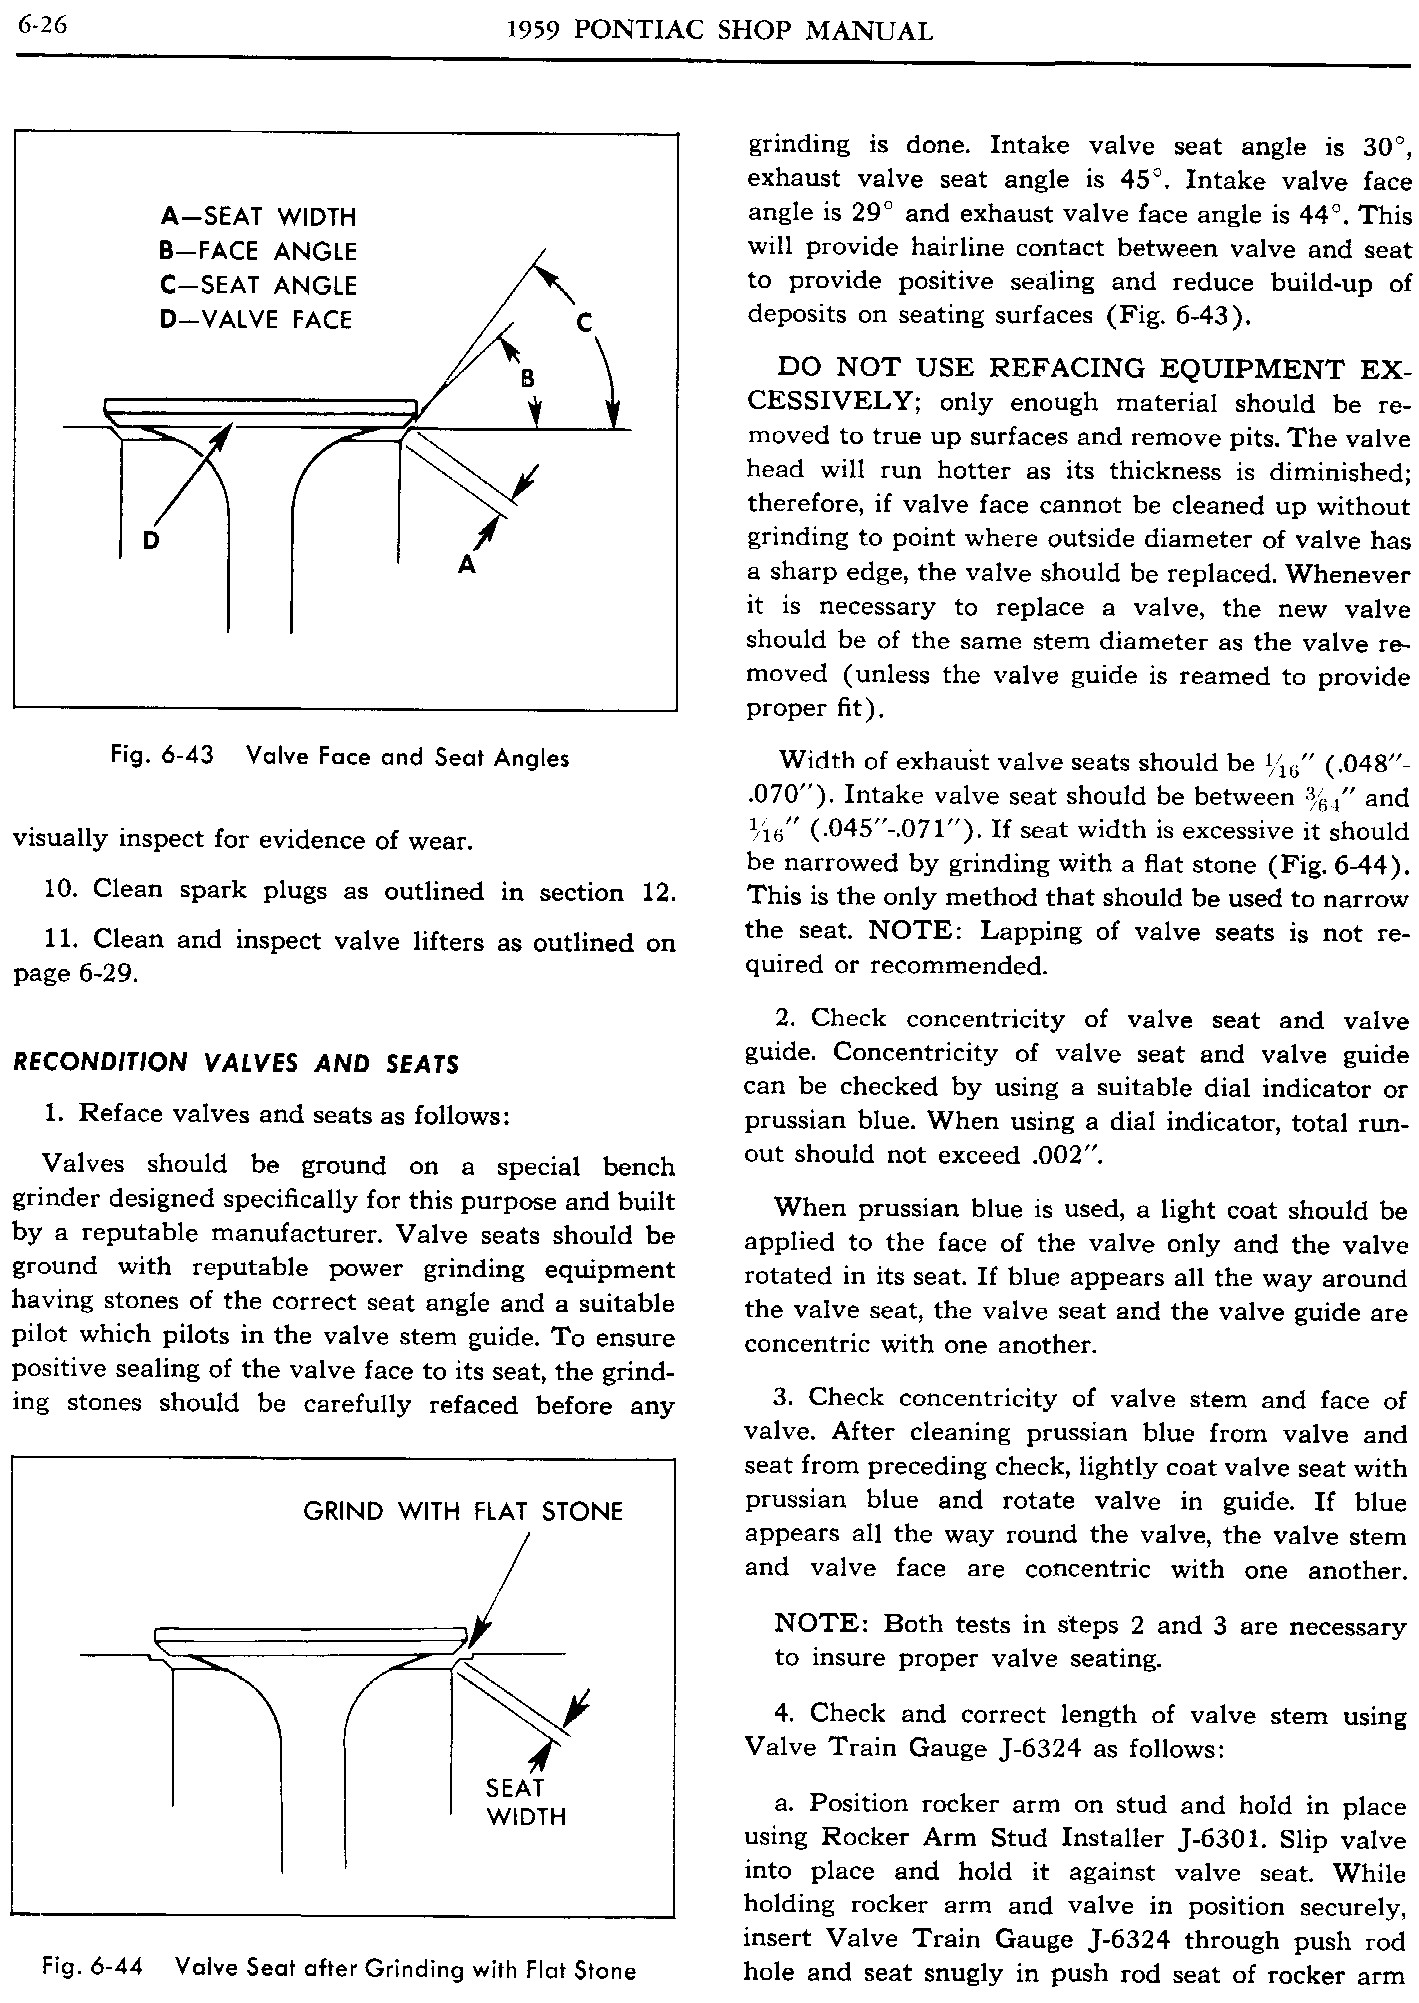 1959 Pontiac Shop Manual- Engine Page 27 of 49